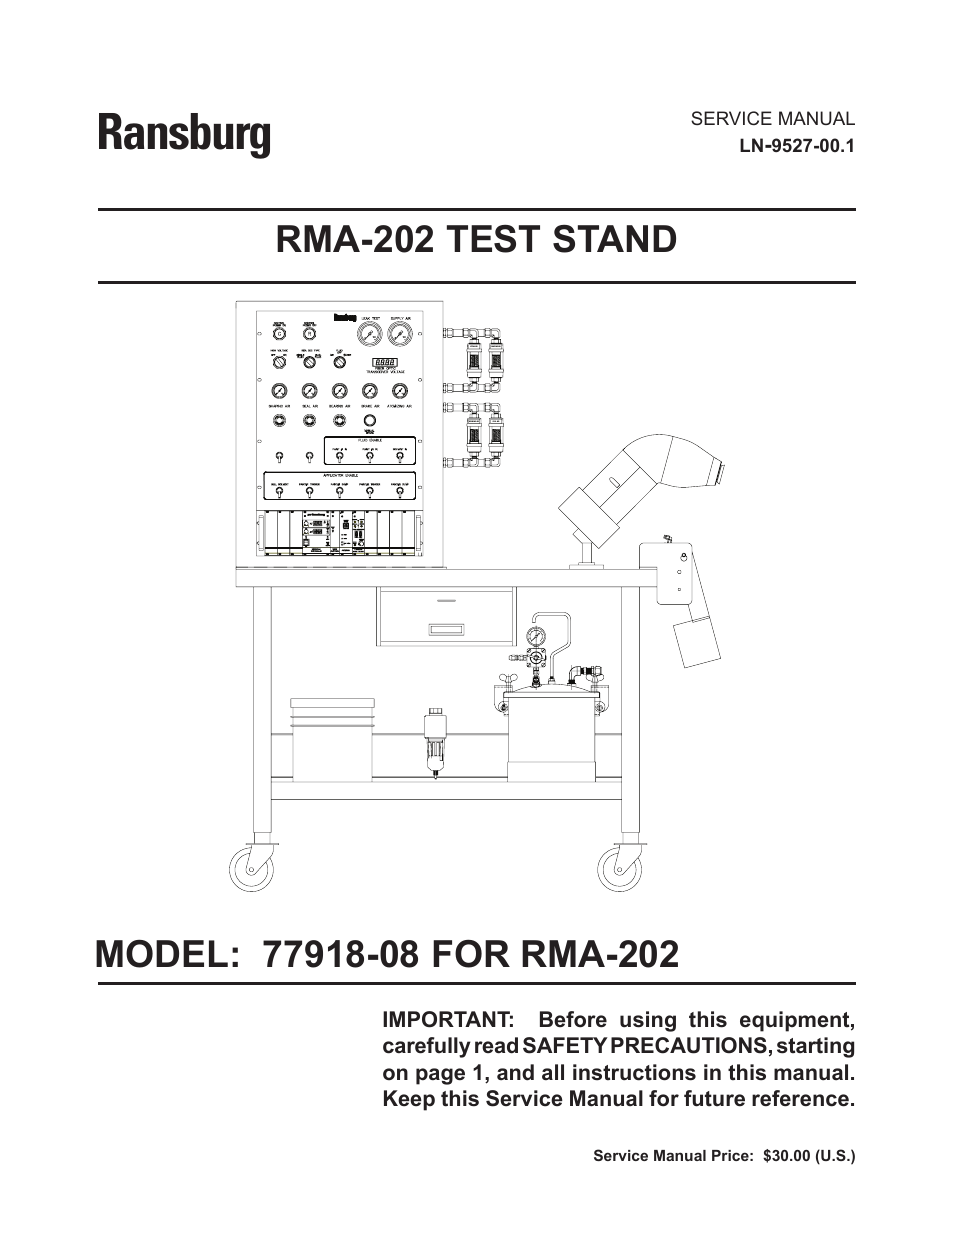 RMA202 Test Stand 77918-08